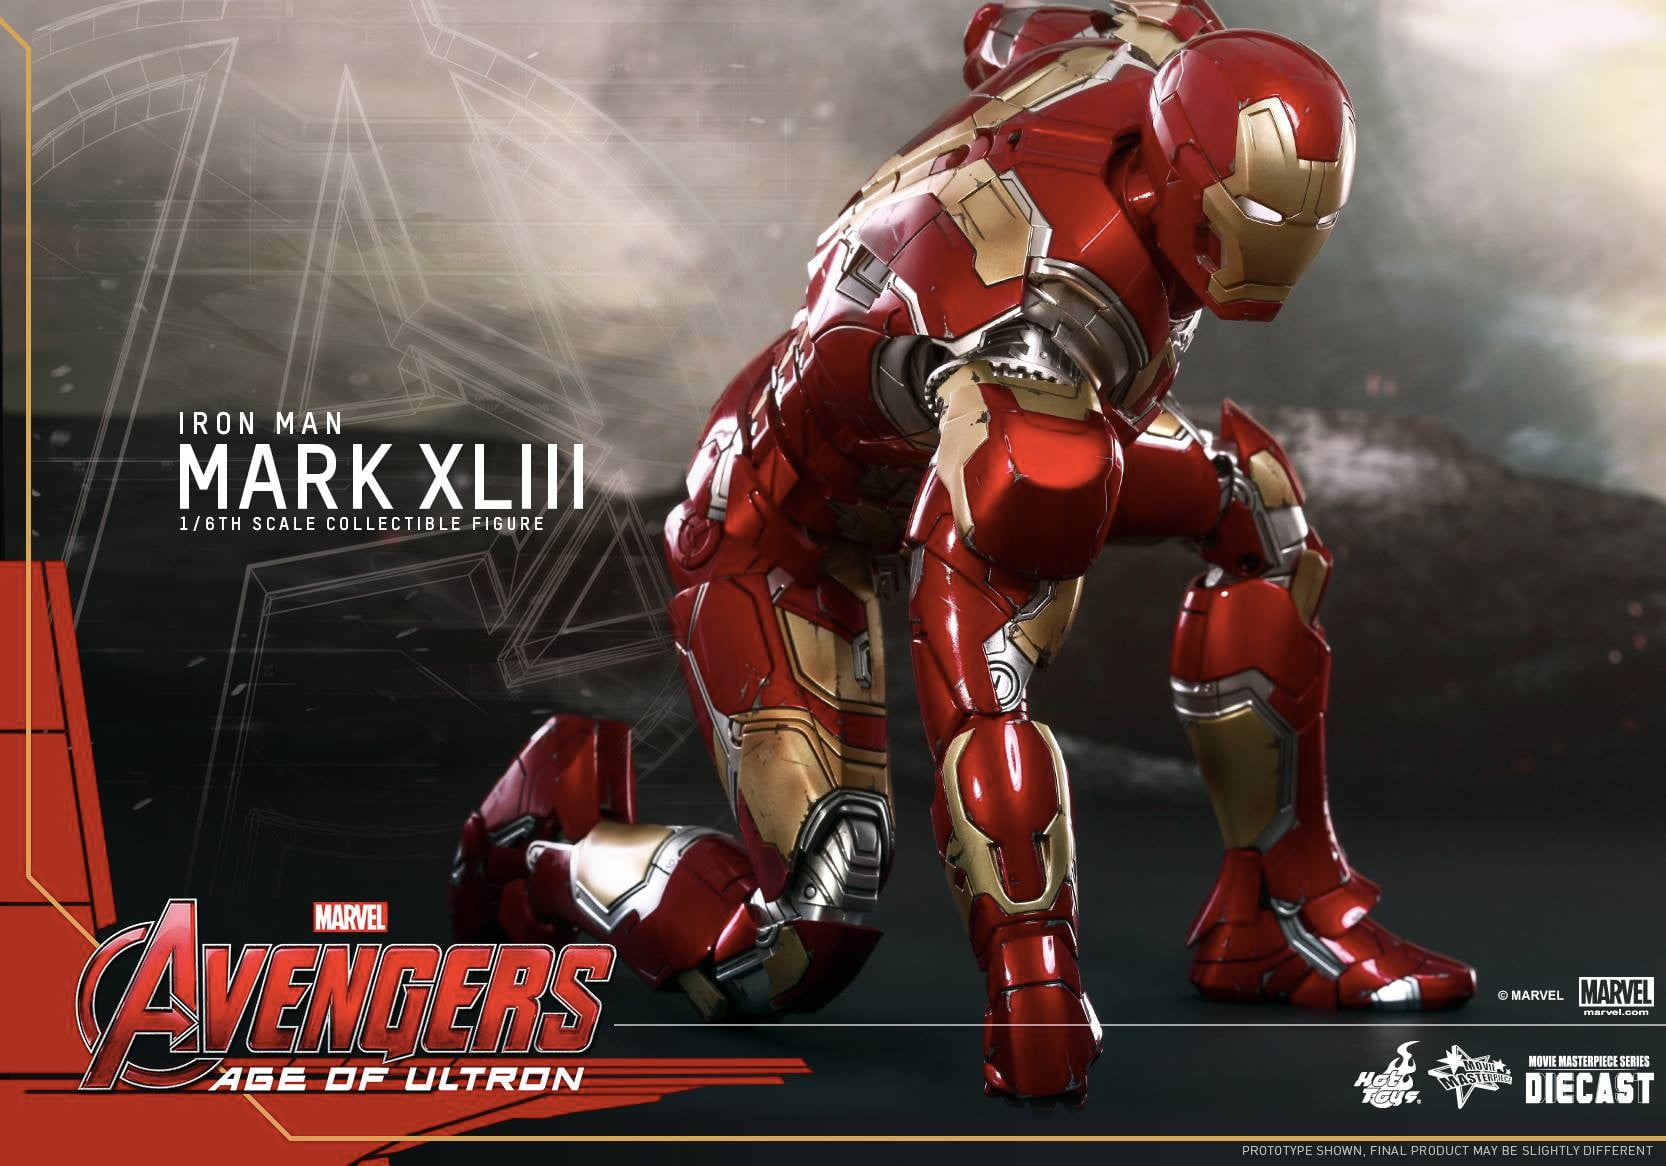 Marvel Avengers Iron-Man poster, Iron Man, red, sport, people